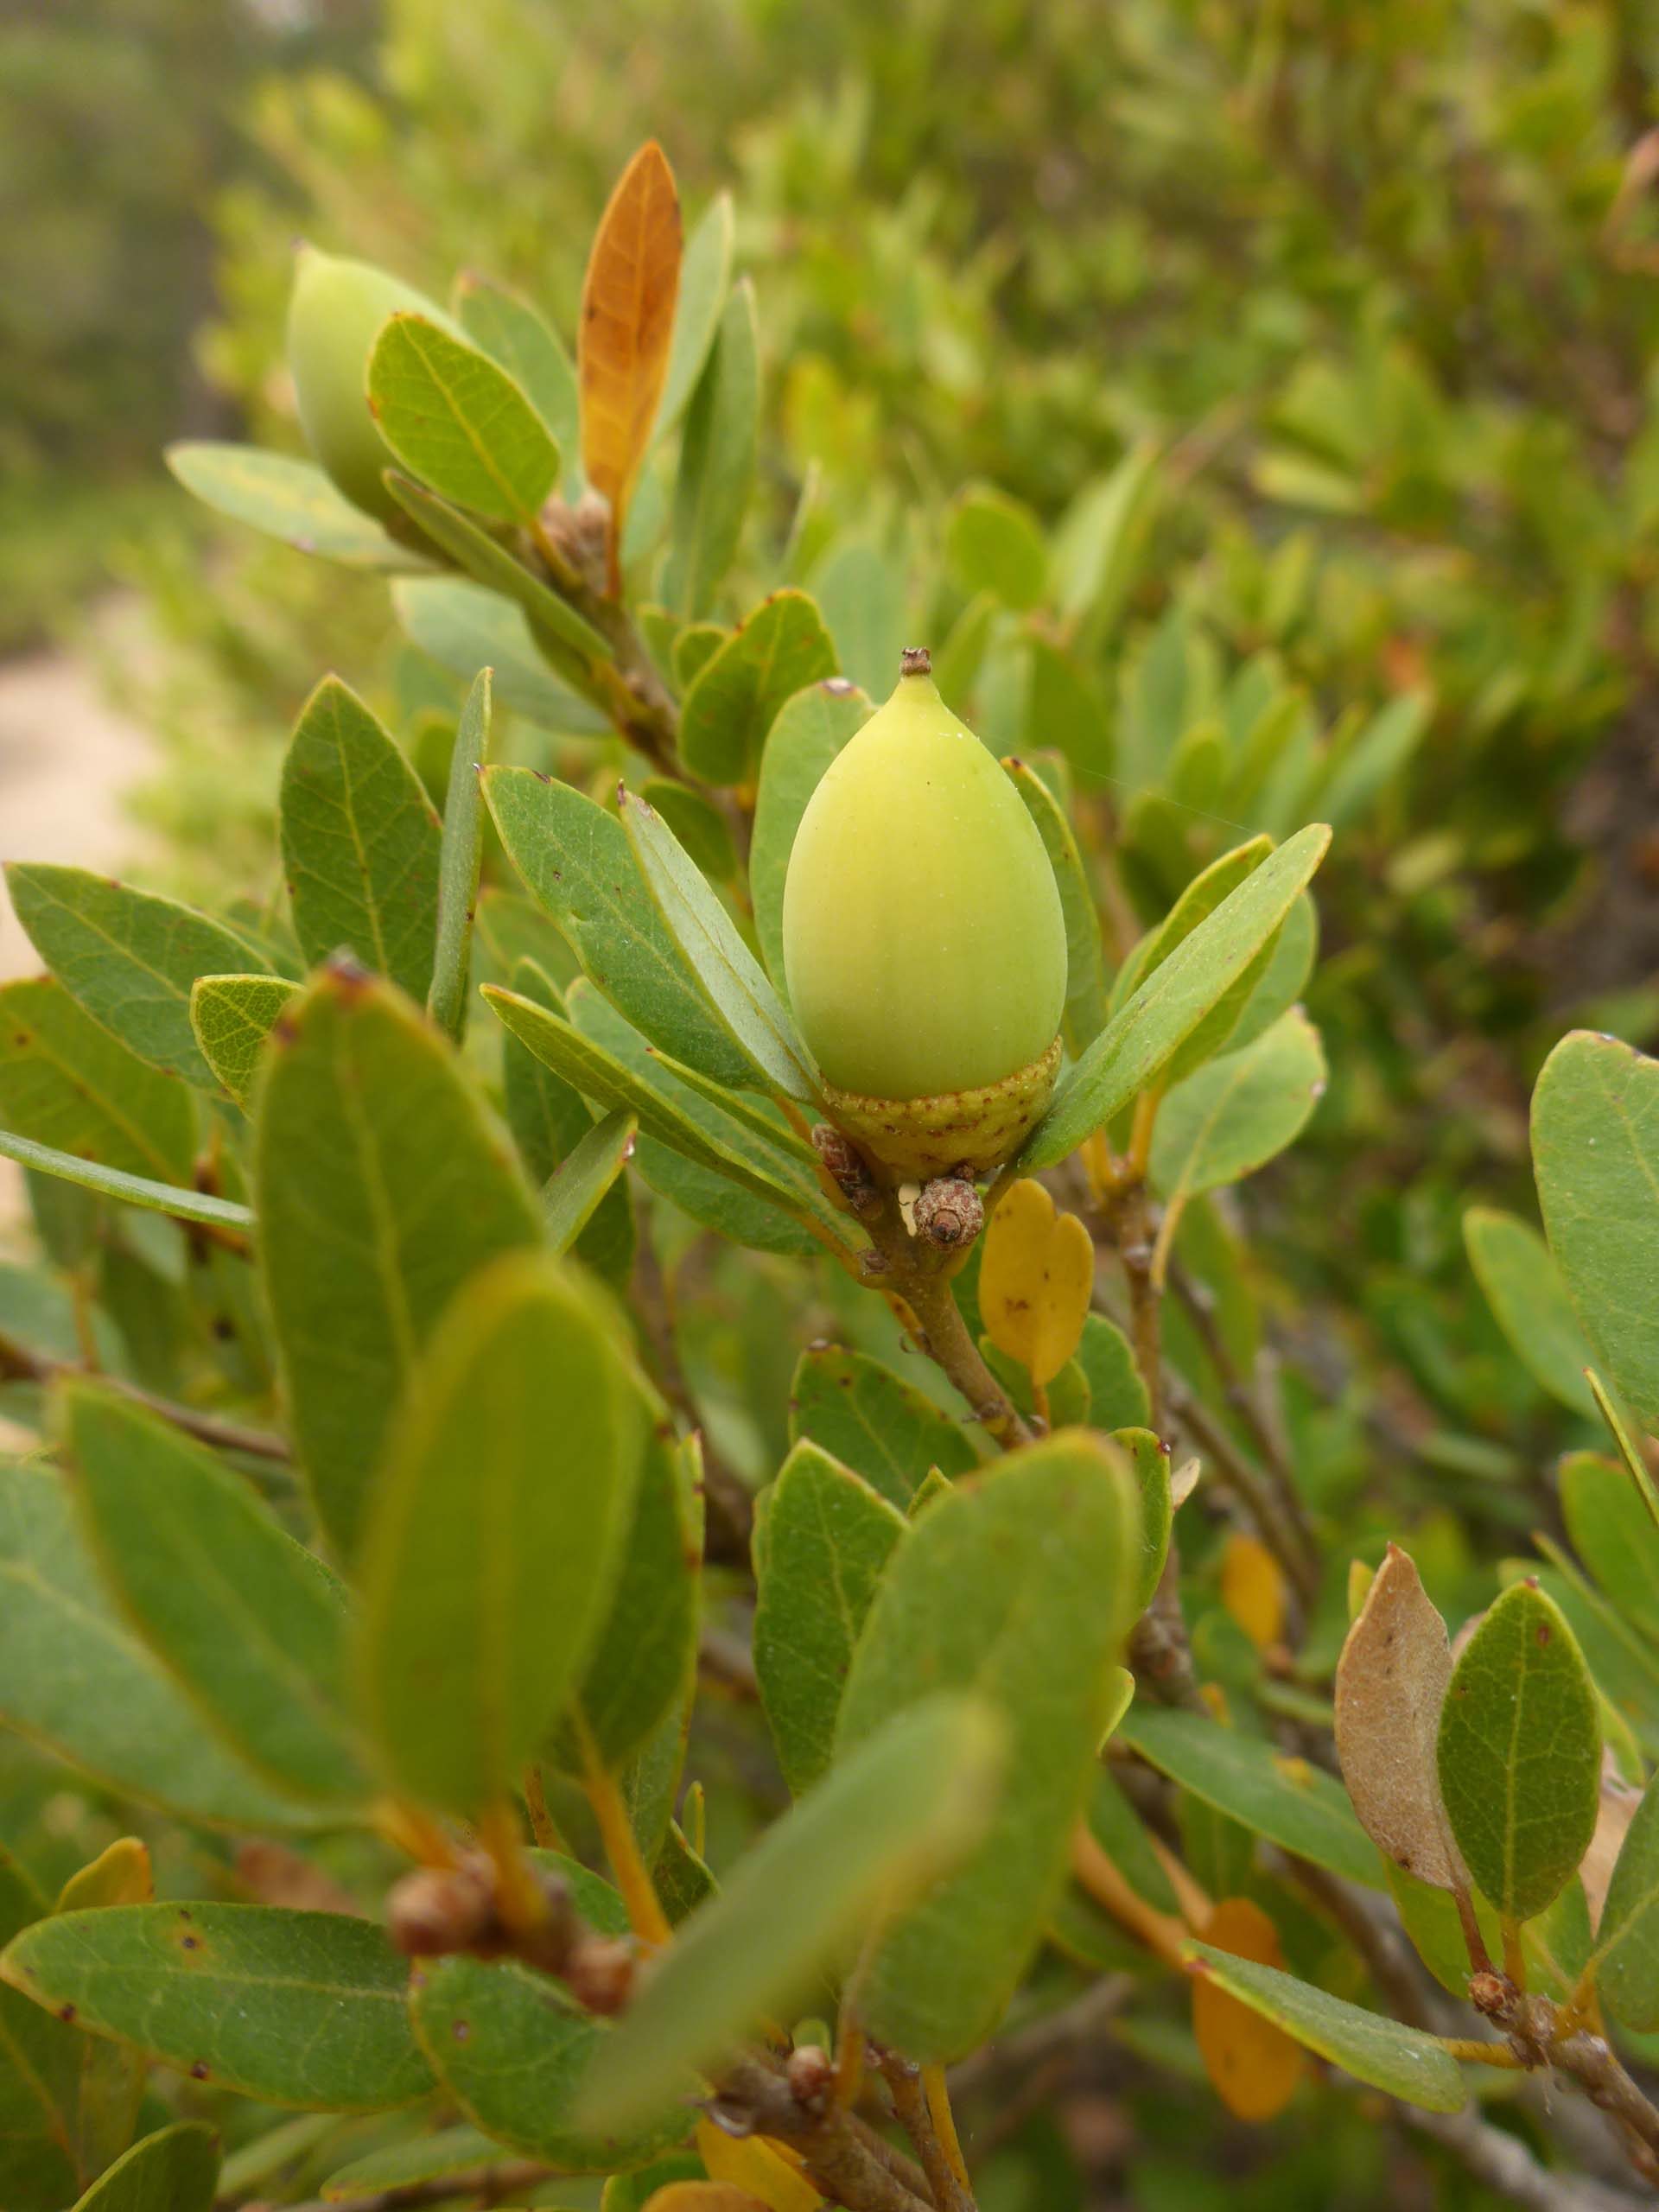 Huckleberry oak acorn. D. Burk.